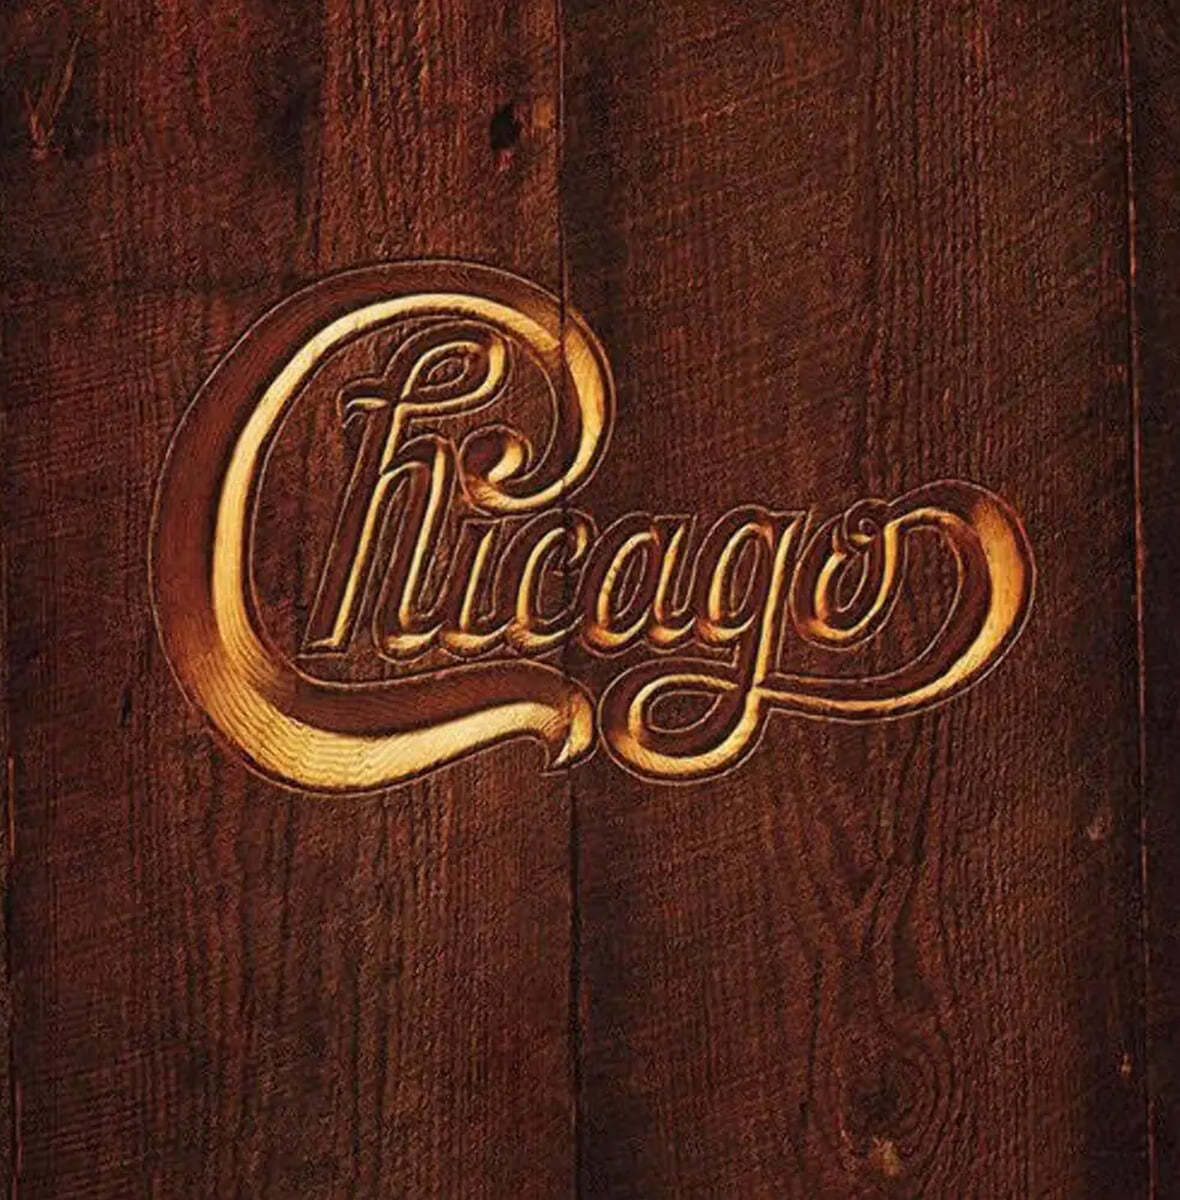 Chicago (시카고) - Chicago V [골드 컬러 LP]